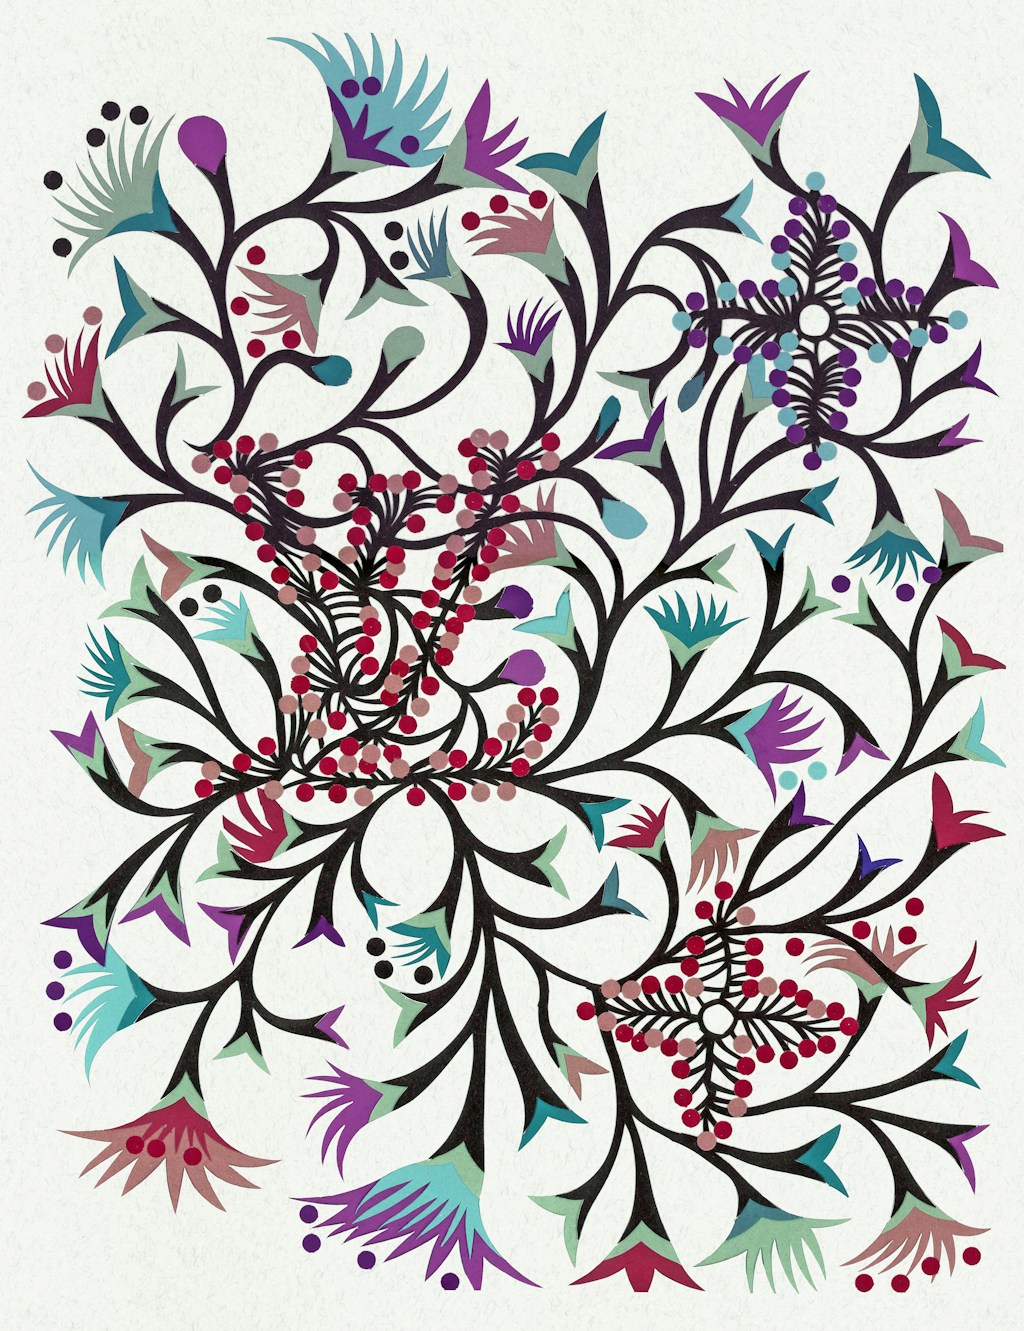 Louis Vuitton flower embroidery design